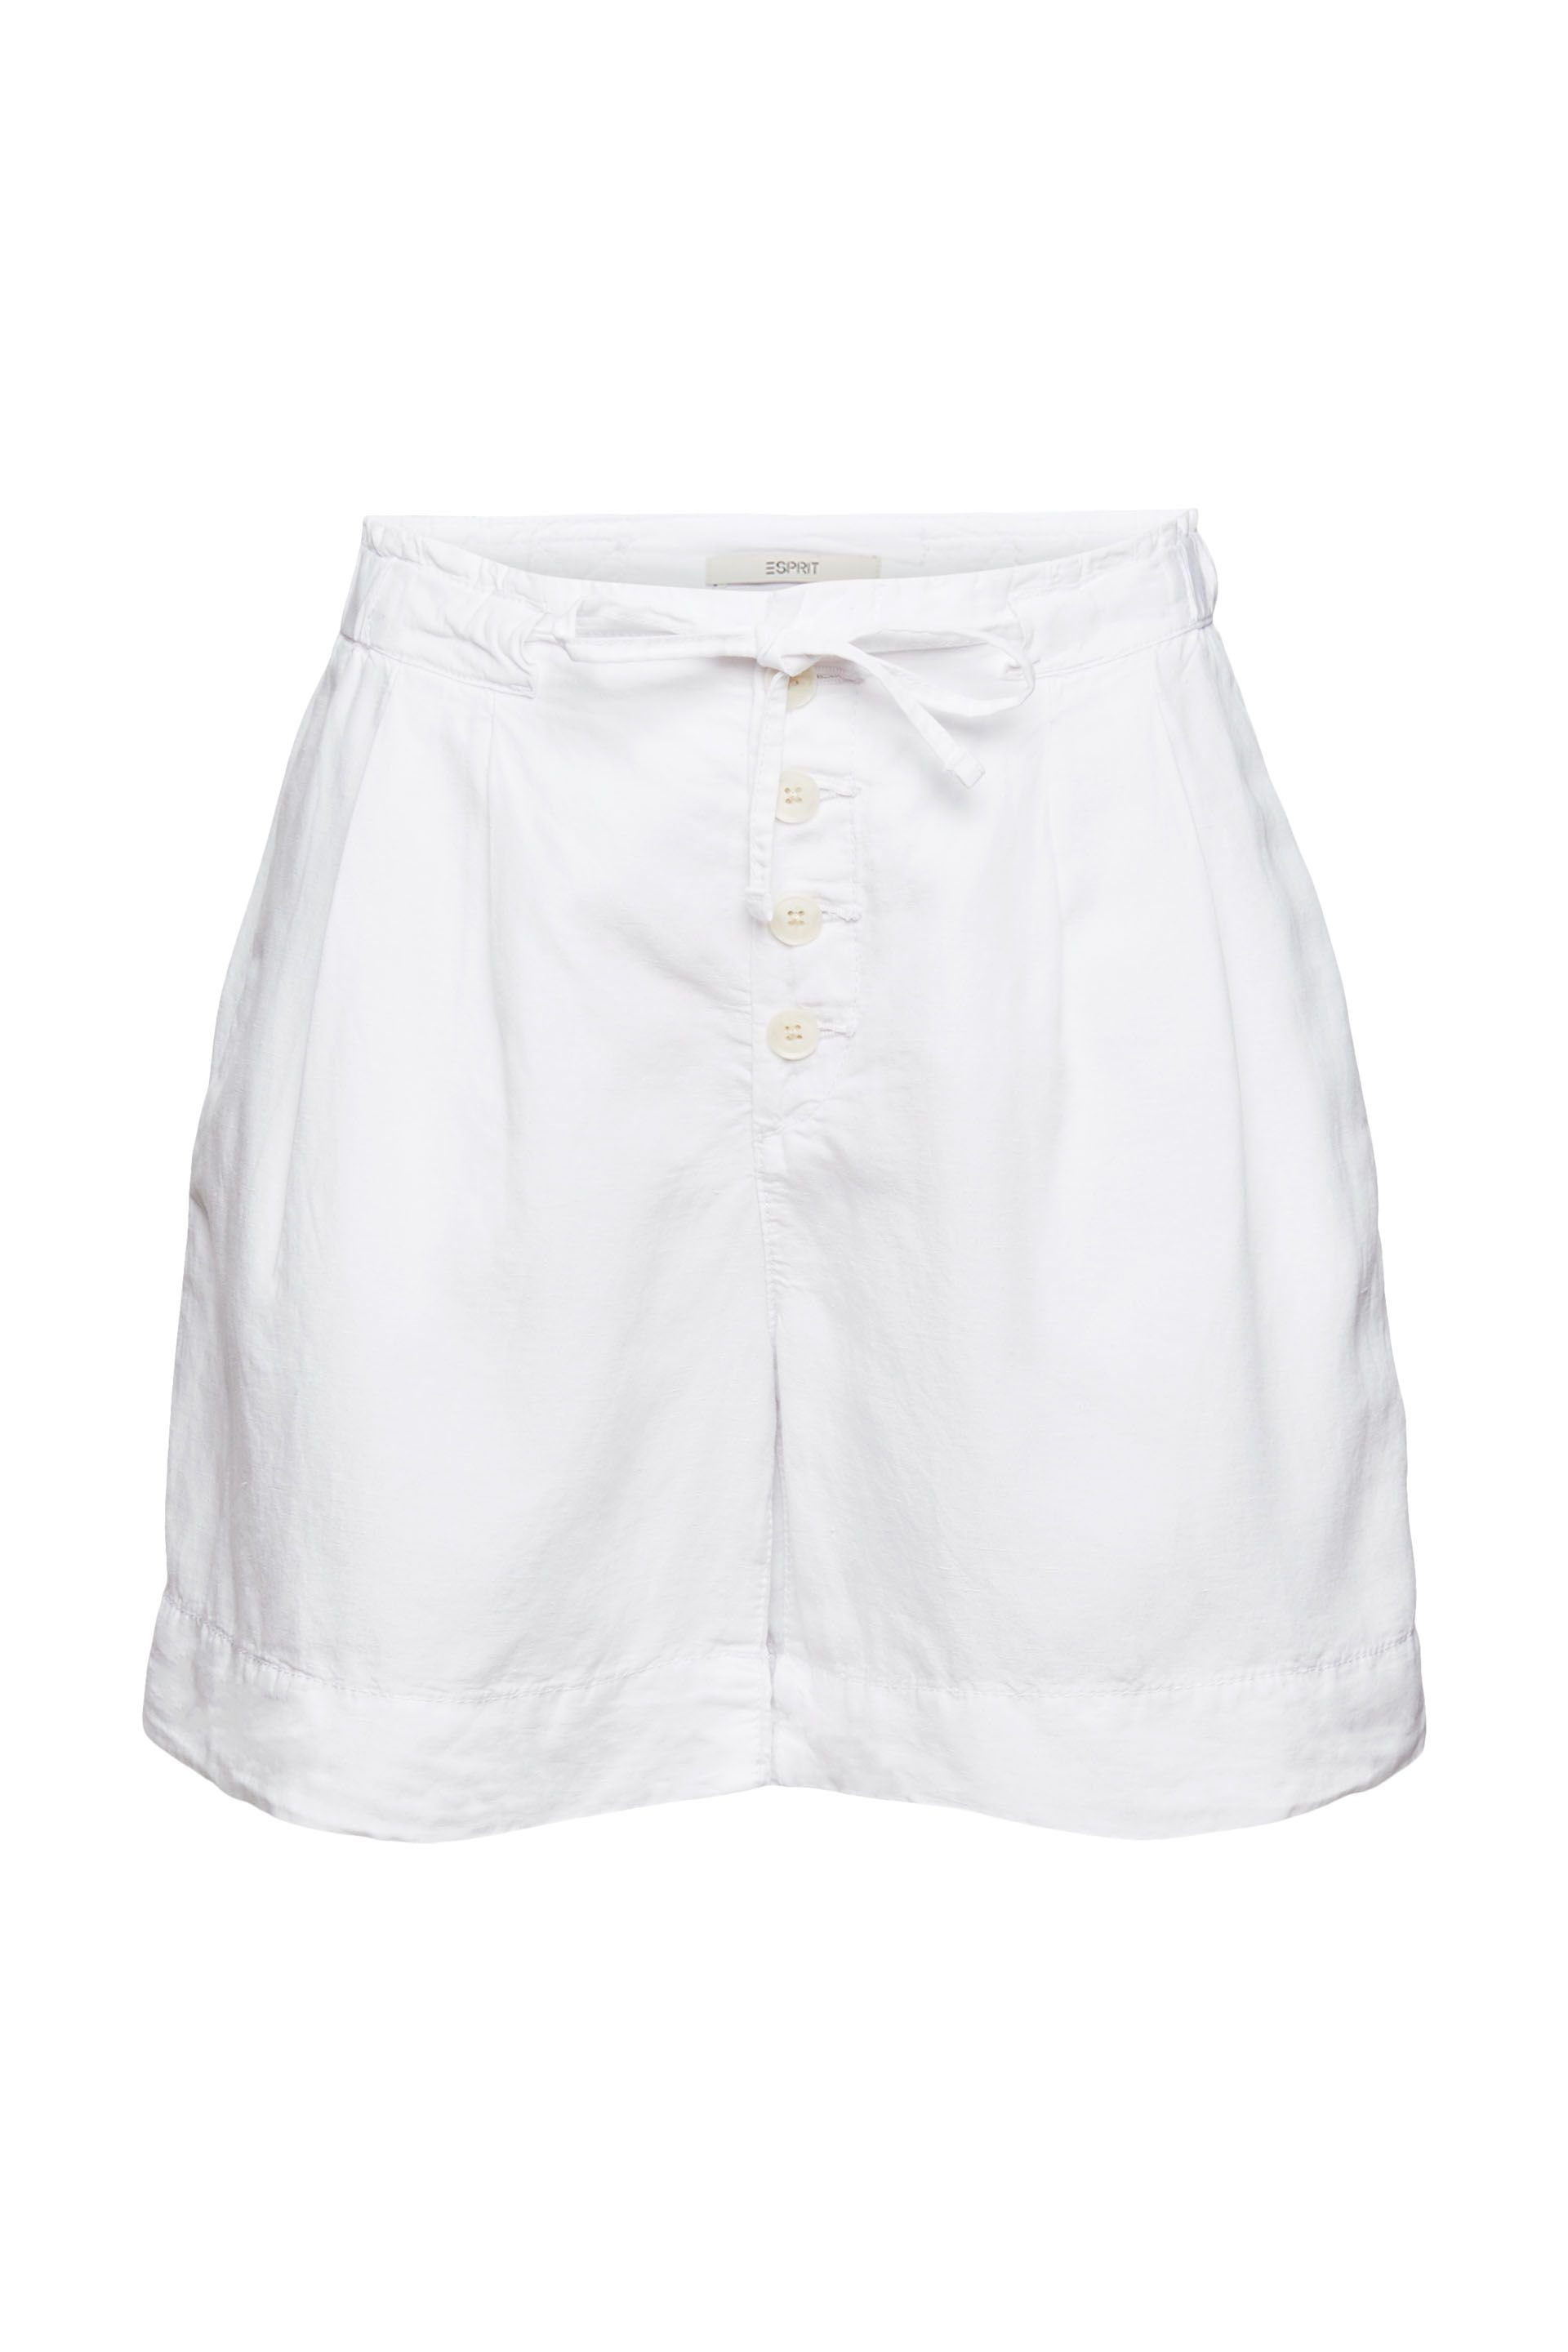 Esprit Shorts white